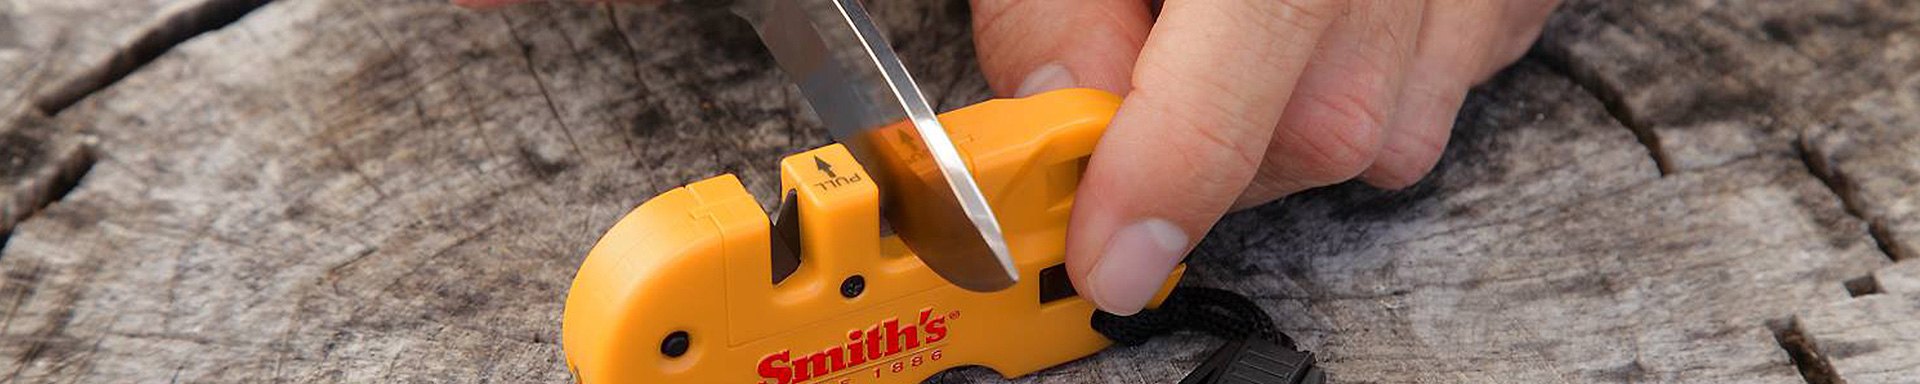 Smiths Mesa Adjustable Diamond Electric Single Slot Black | Smith's